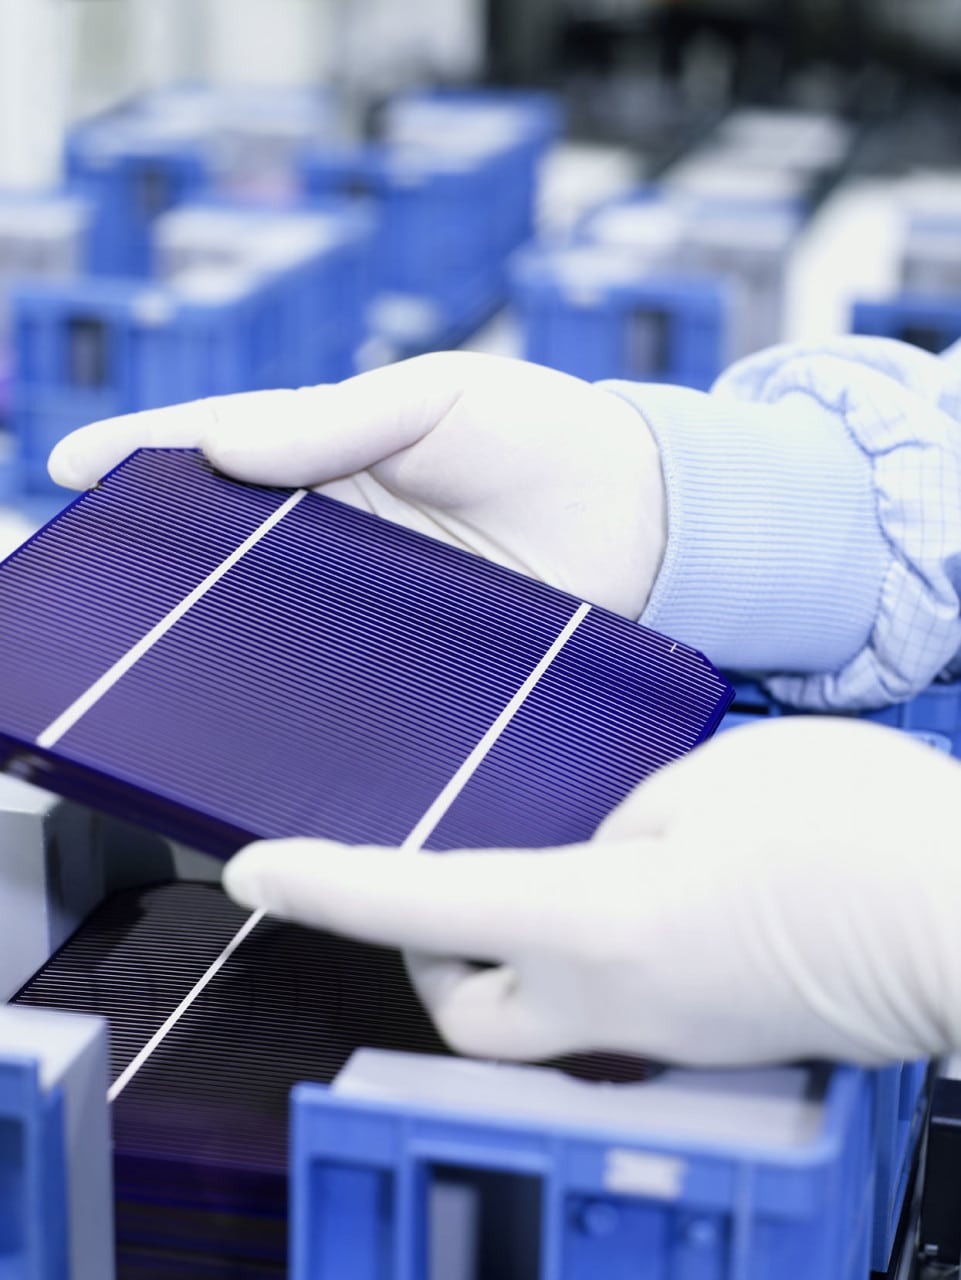 U.S. Solar Installations Dip Amid Uncertainty